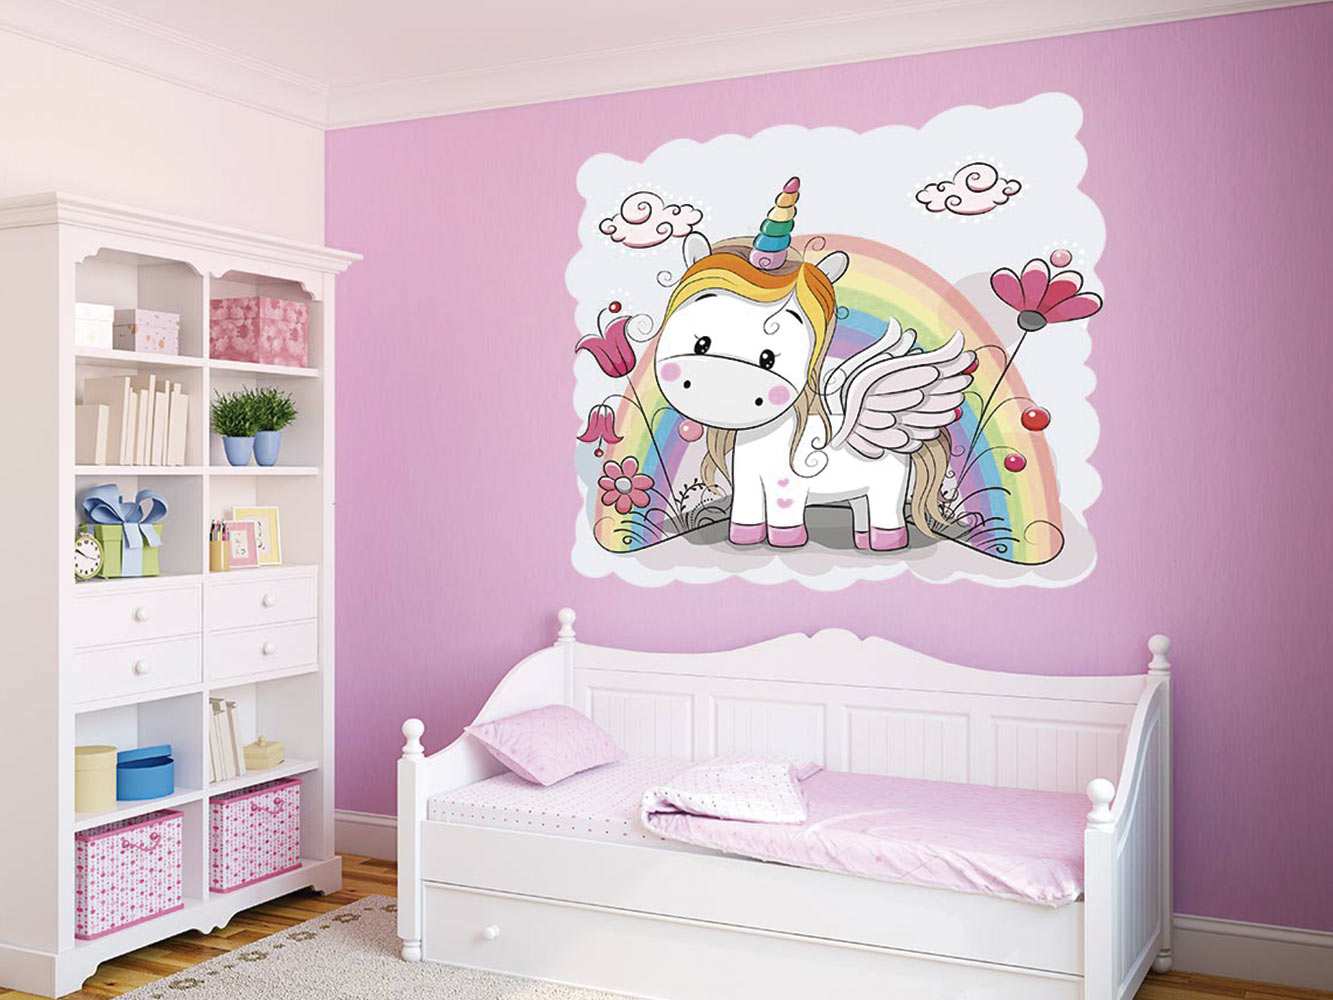 Vinilos pared infantiles set de unicornios y arcoiris - TenVinilo